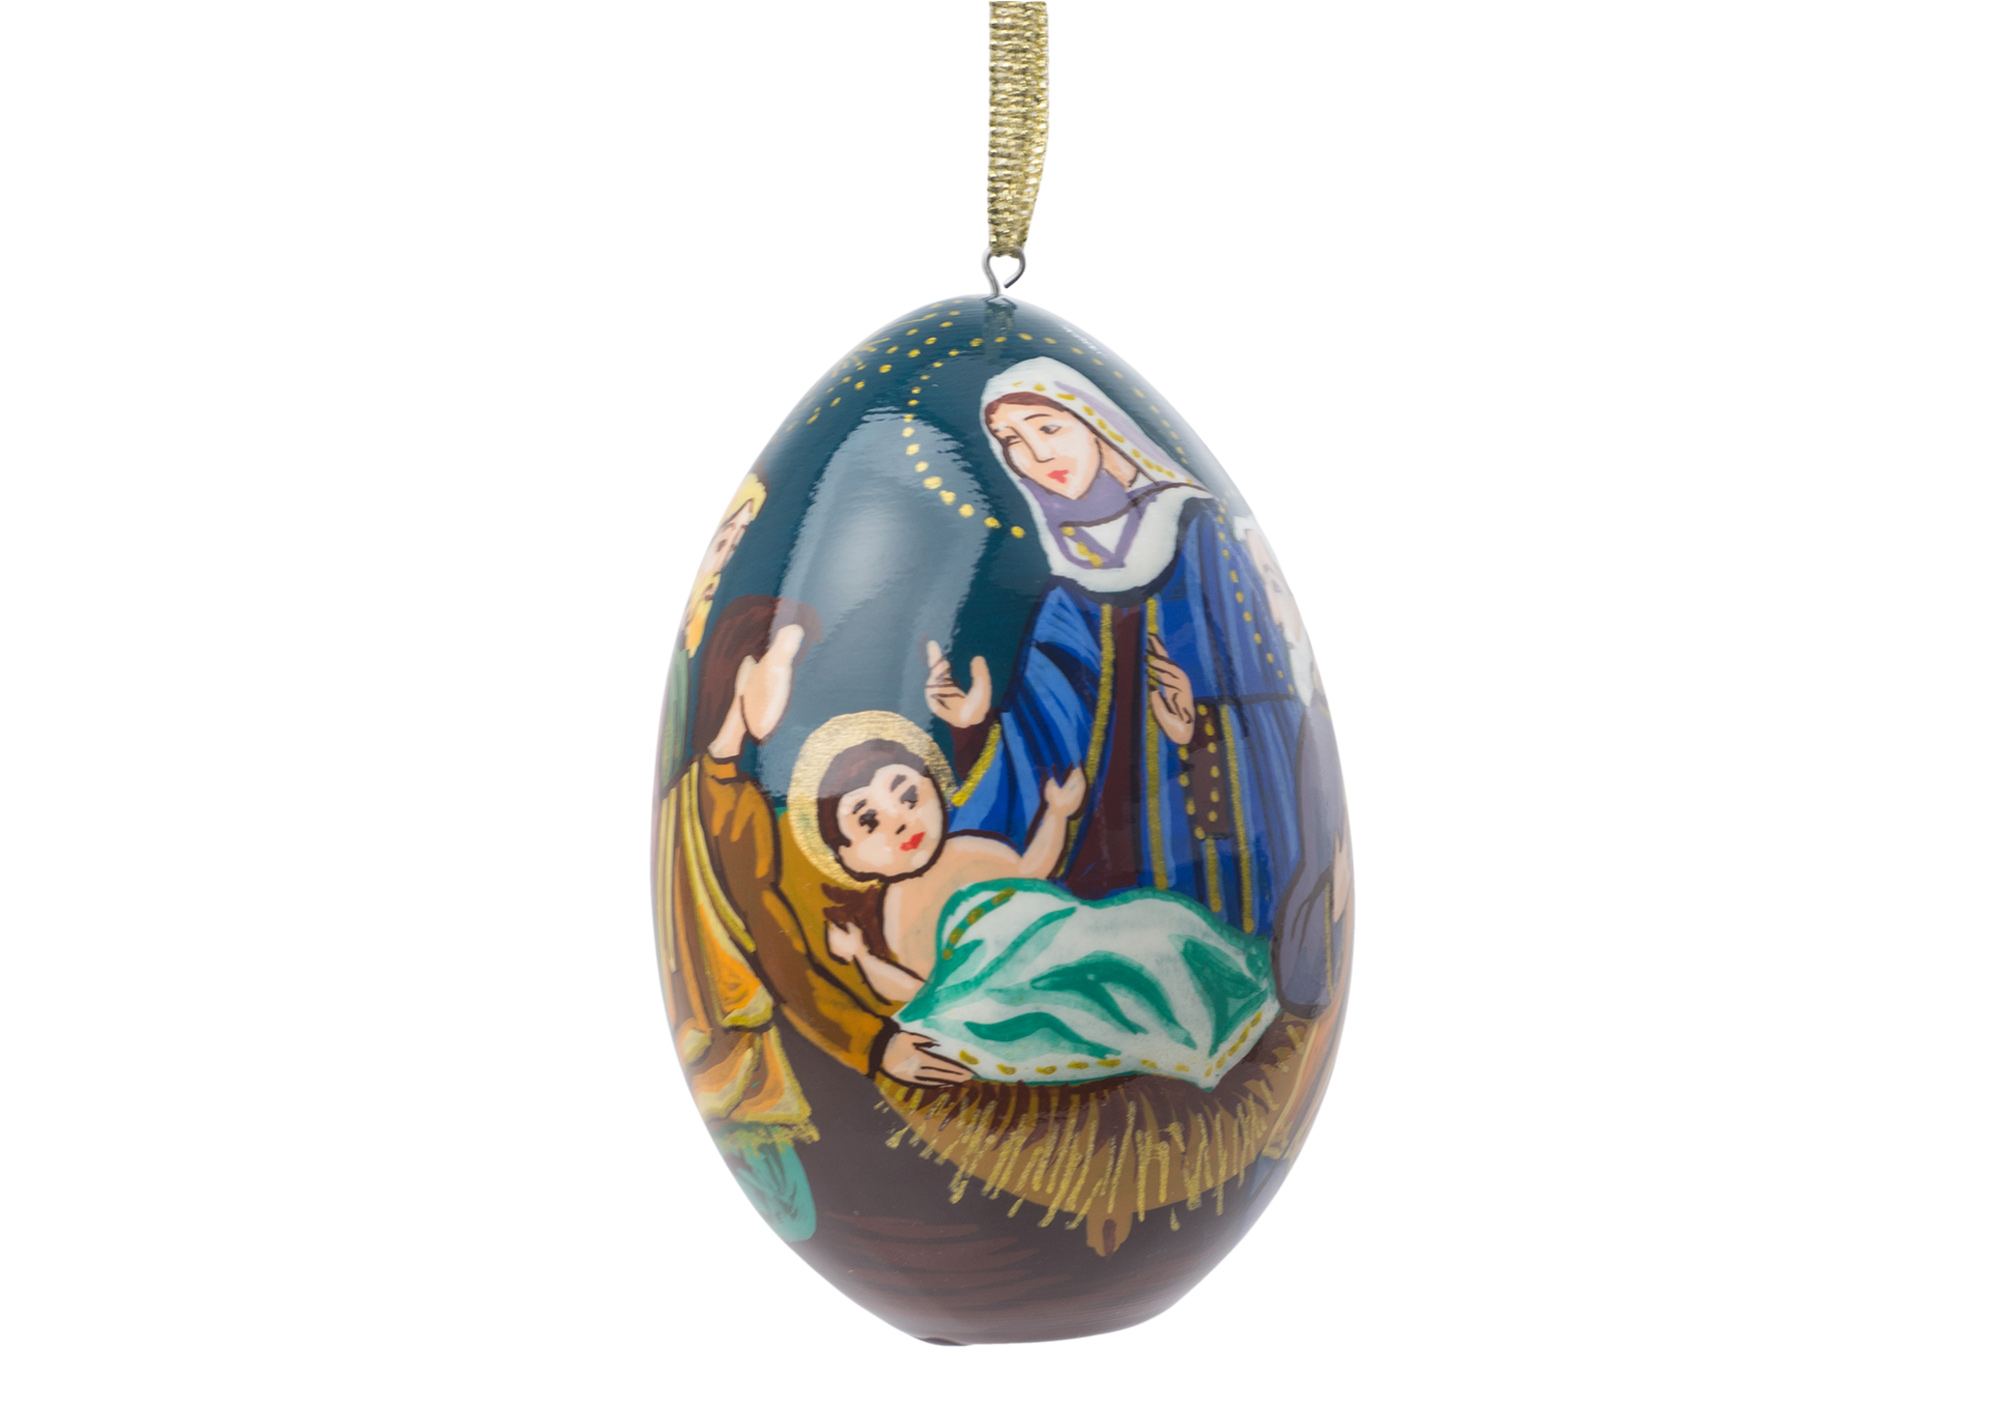 Buy Nativity Ornament – Western style, 3" at GoldenCockerel.com